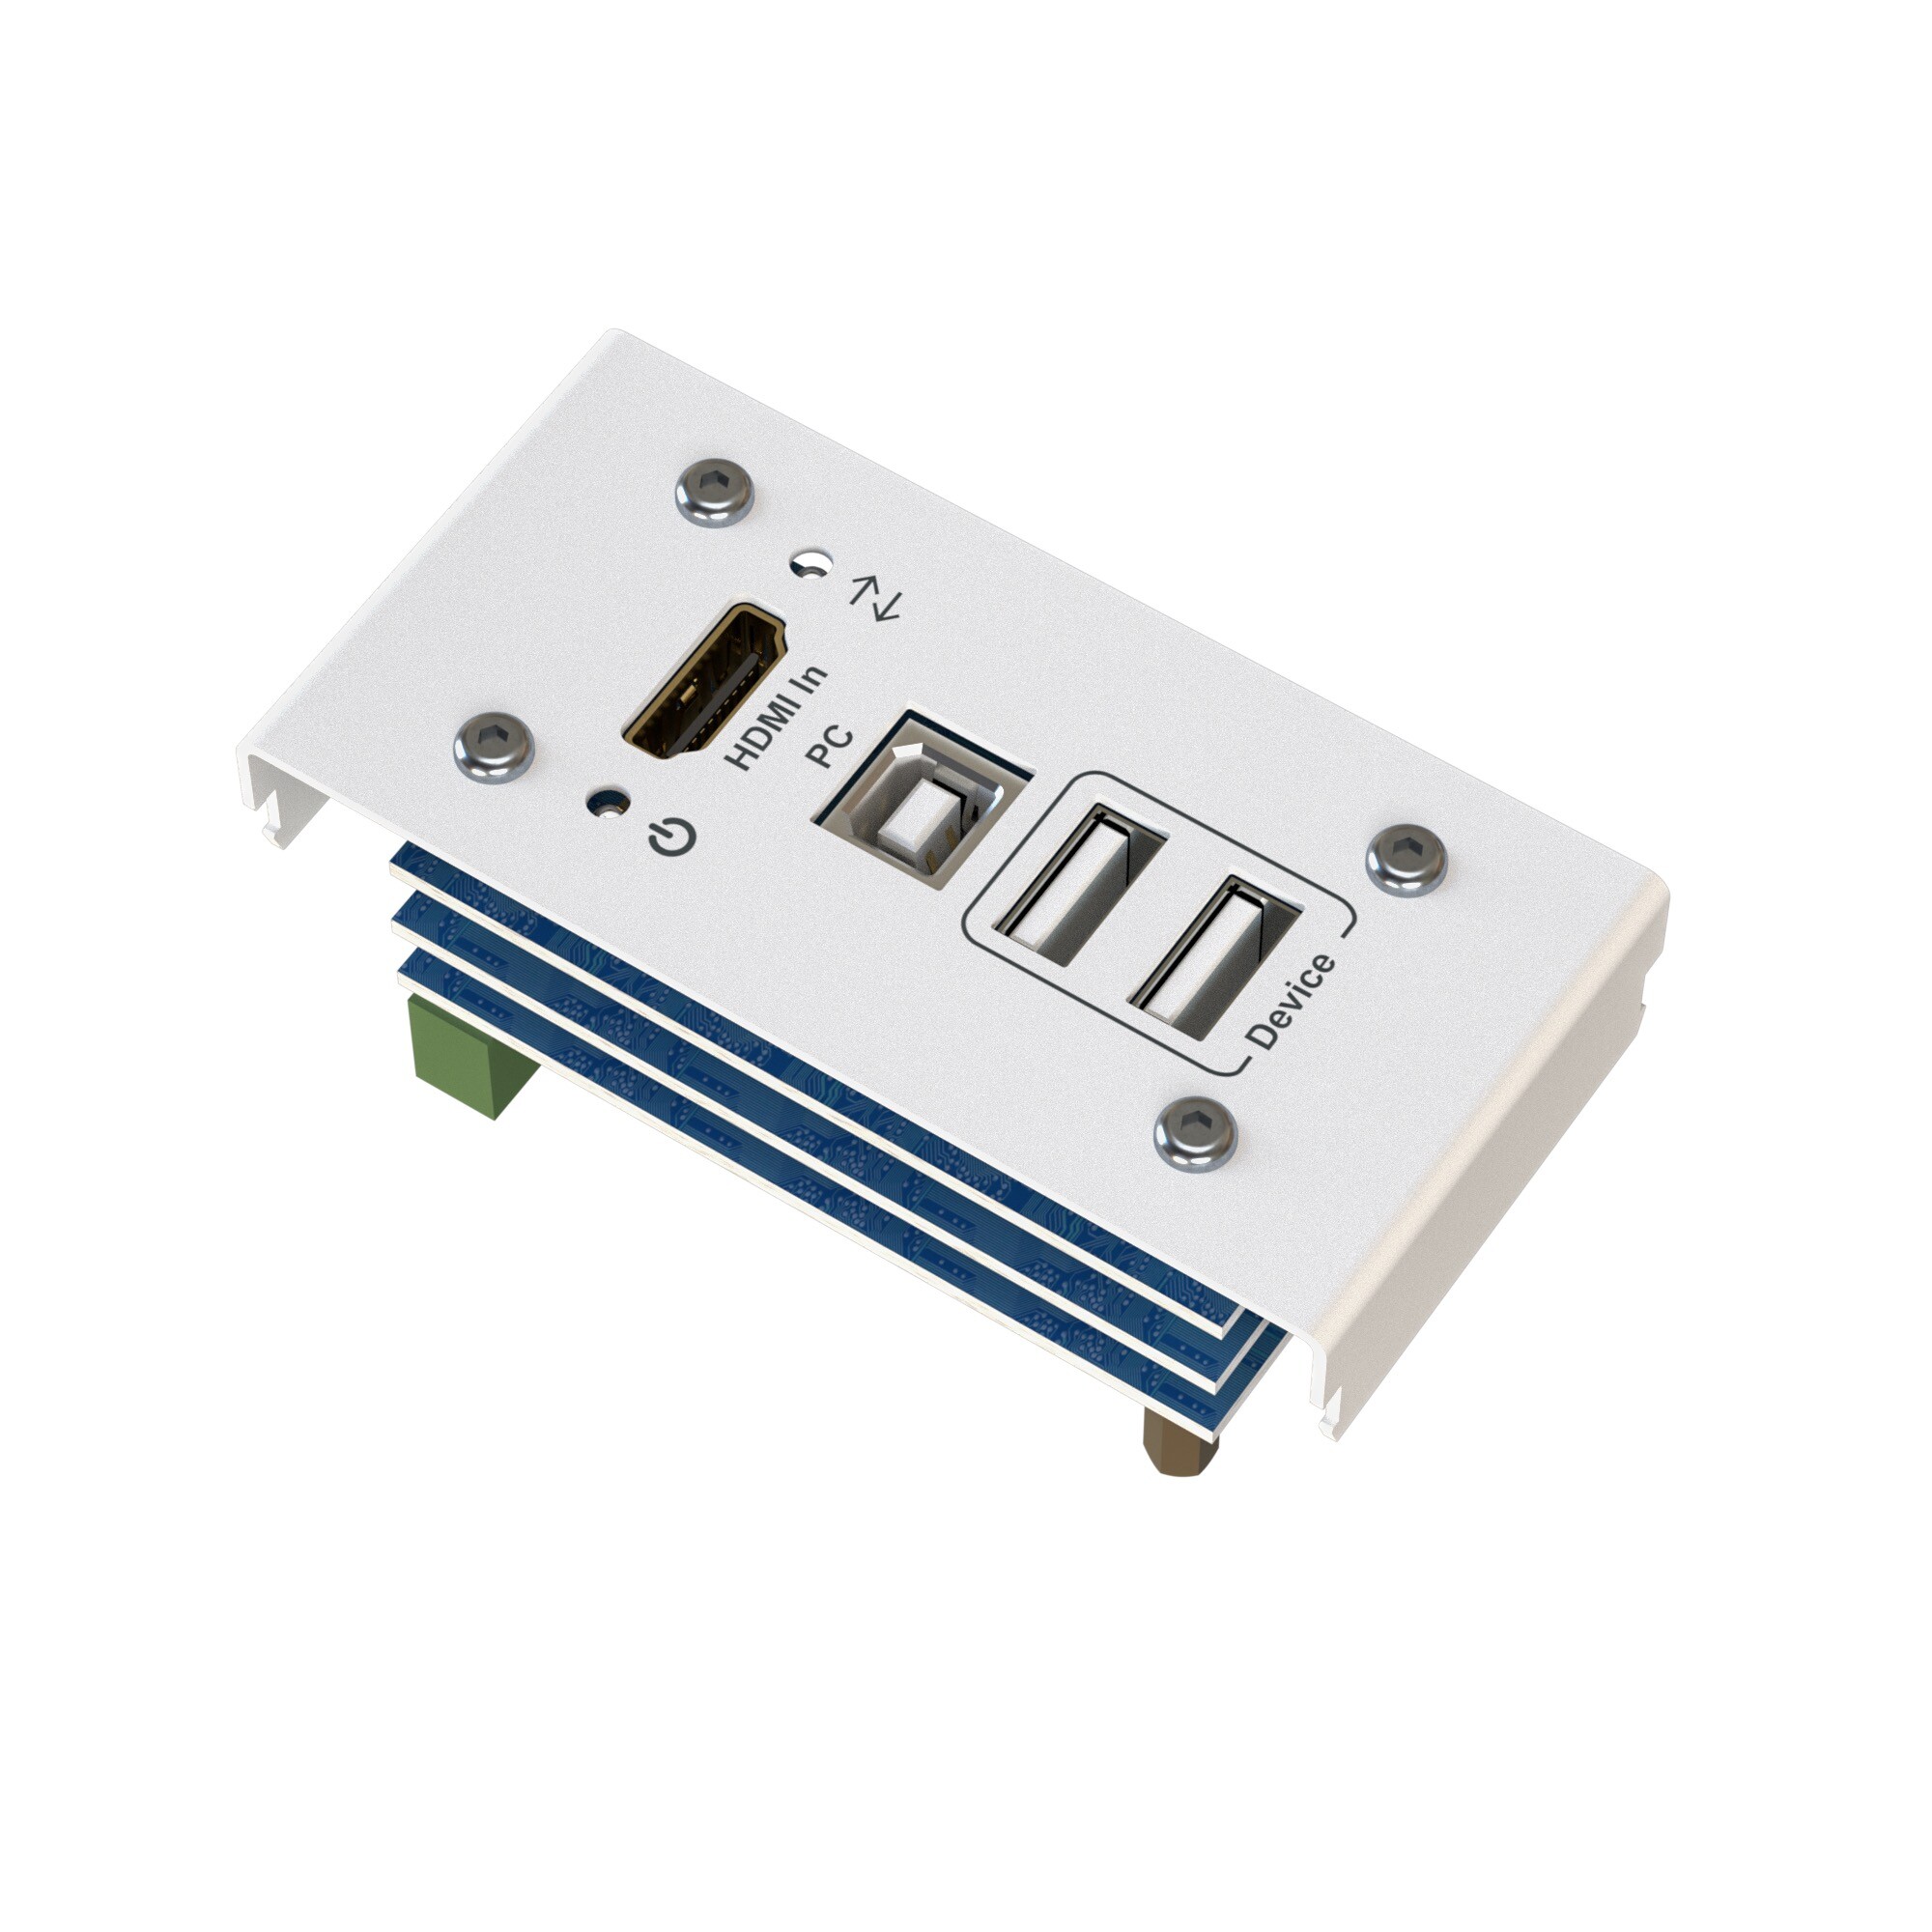 Kindermann-Konnect-flex-45-HDMI-USB-Transmitter